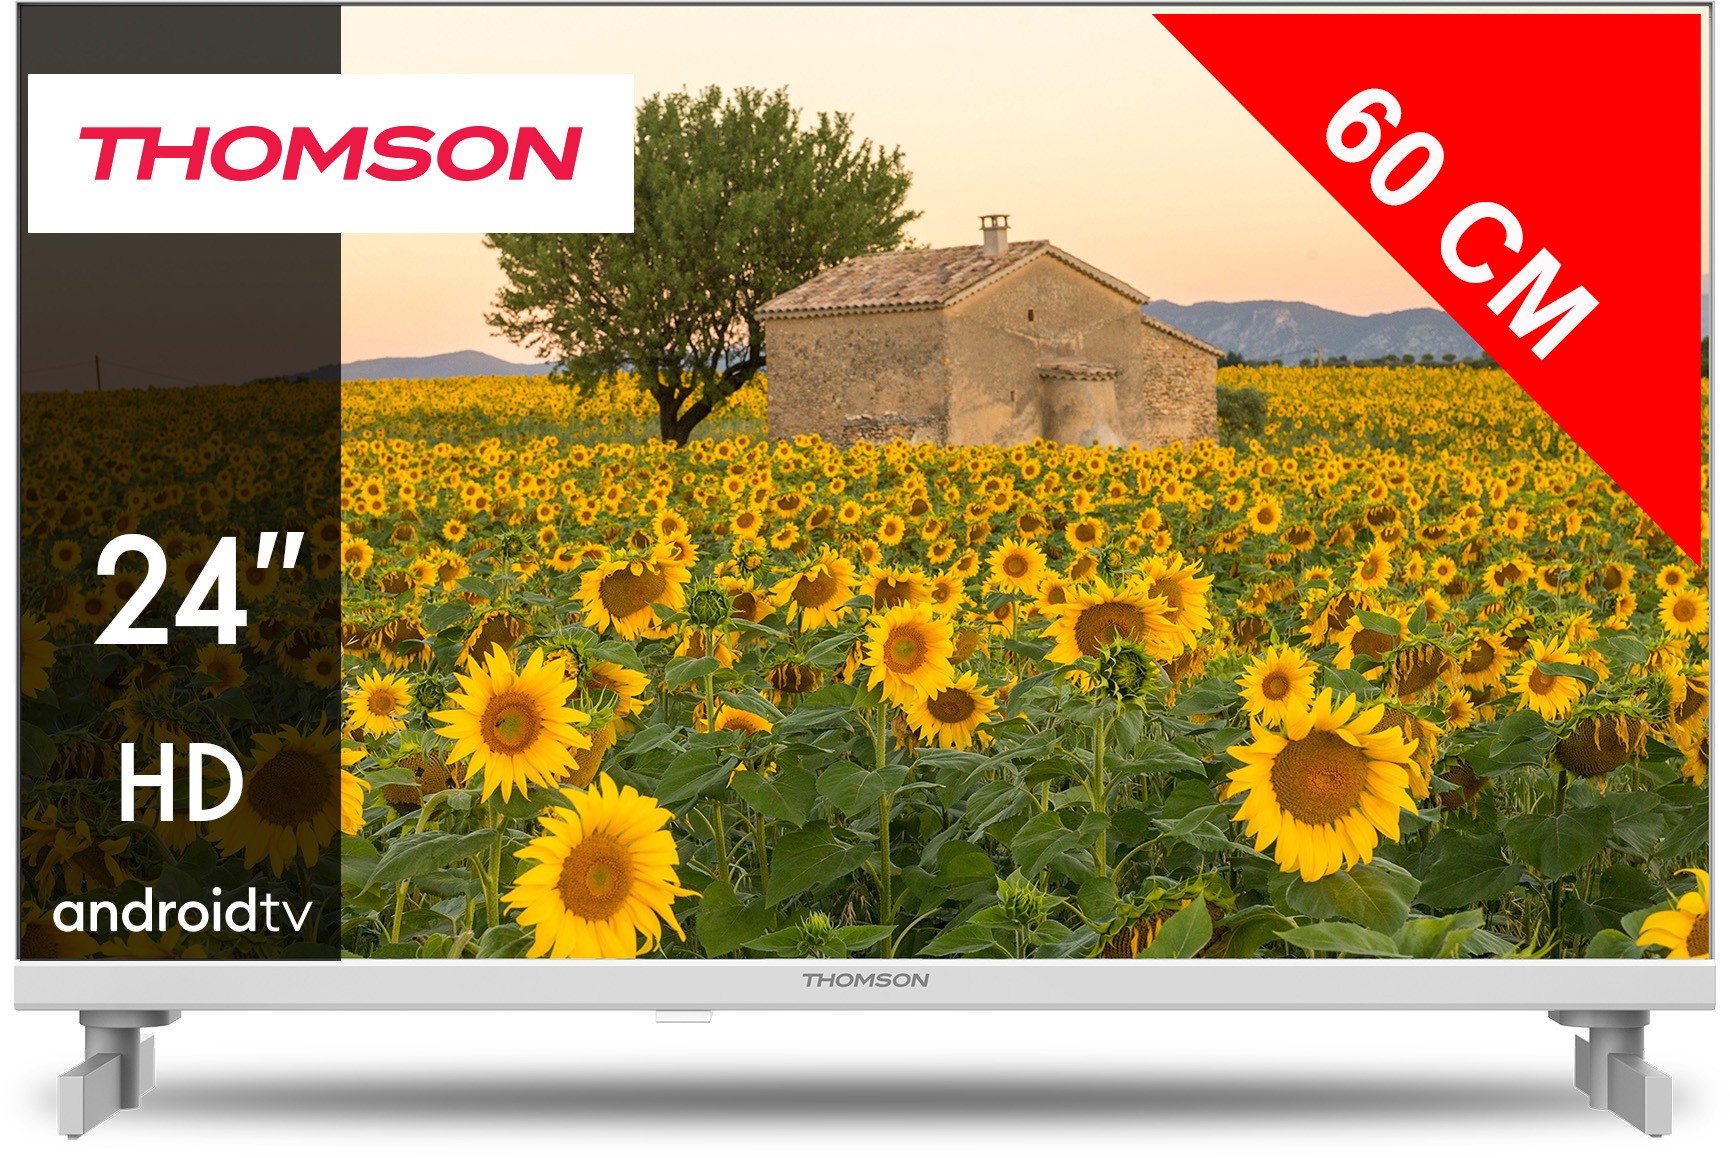 THOMSON TV LCD 60 cm 60 Hz Android TV 24"  24HA2S13CW